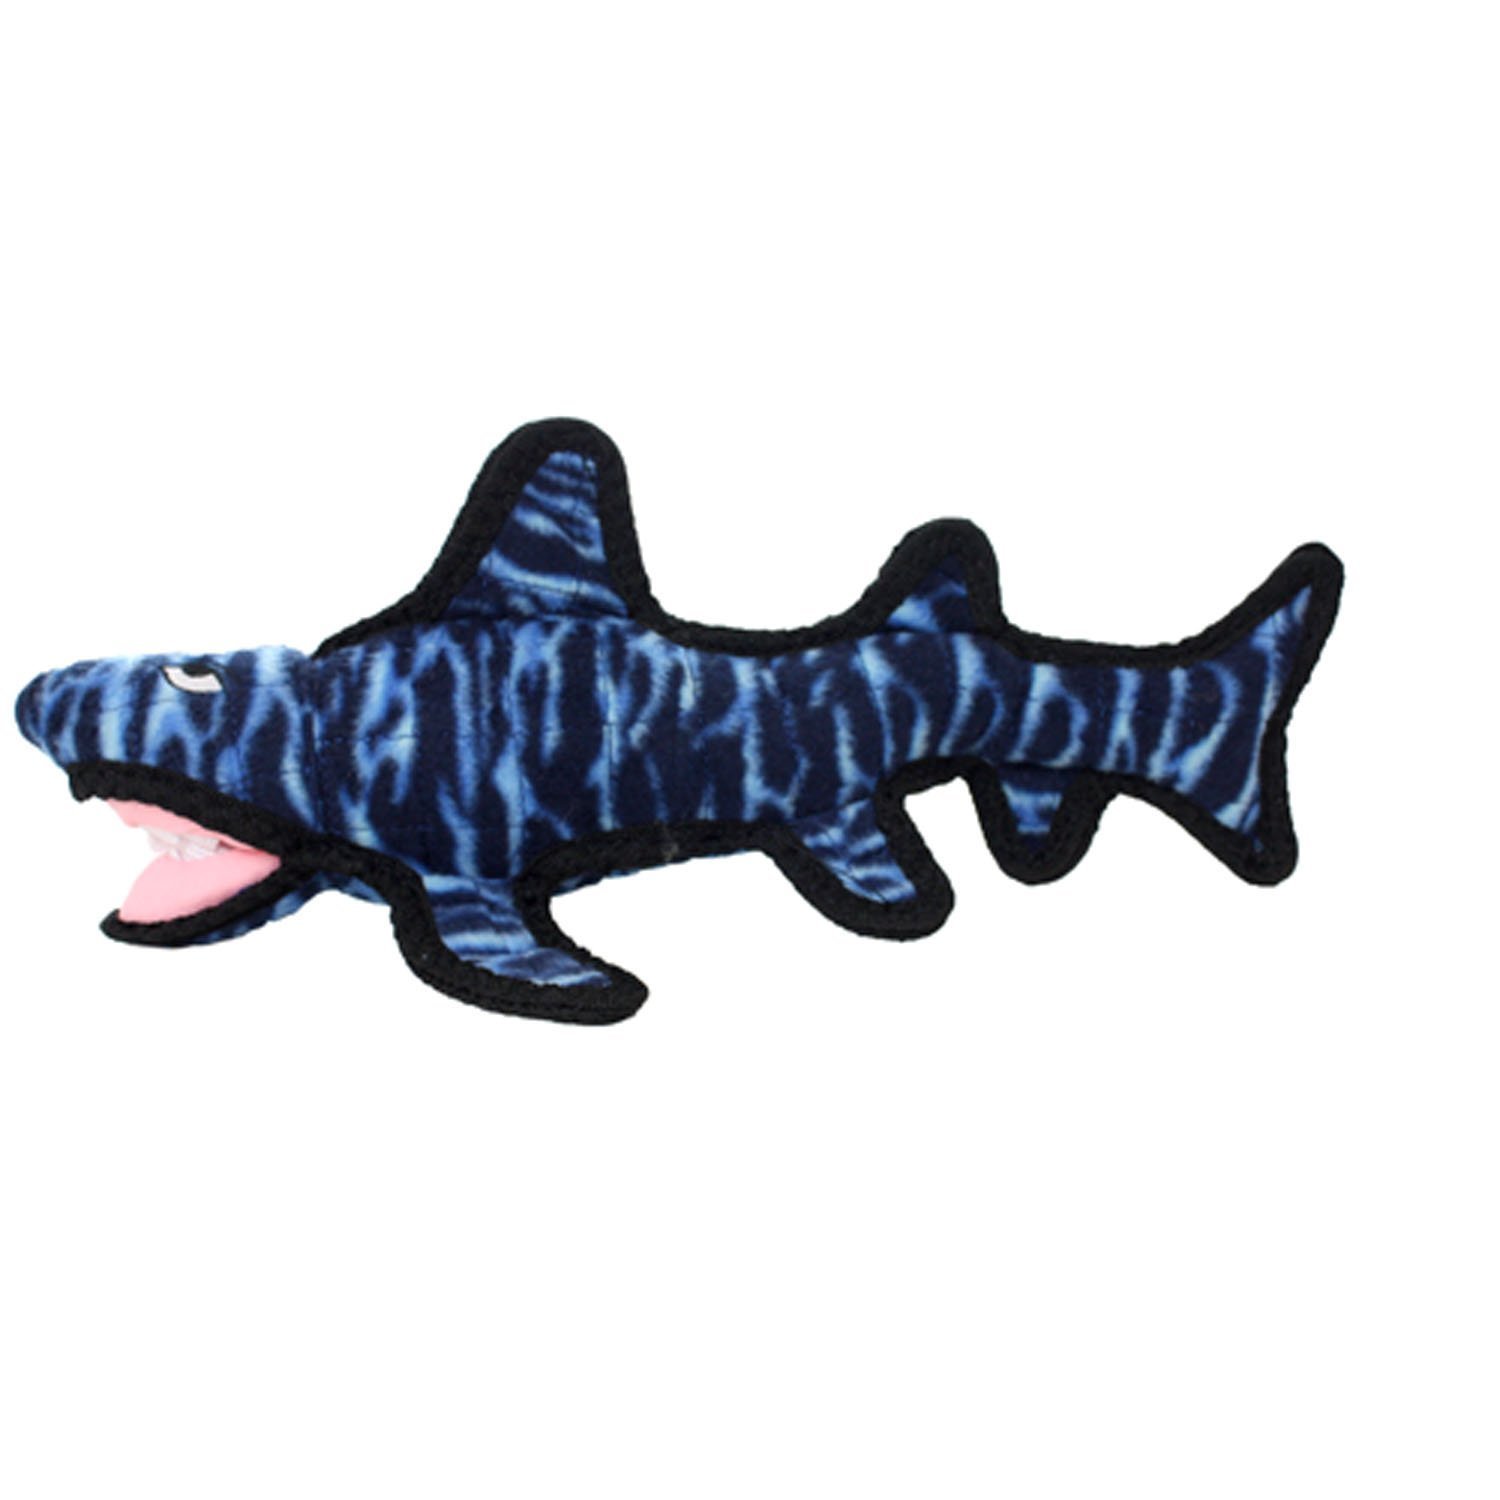 Tuffy Sea Creatures Dog Toy - Shack the Shark image 0